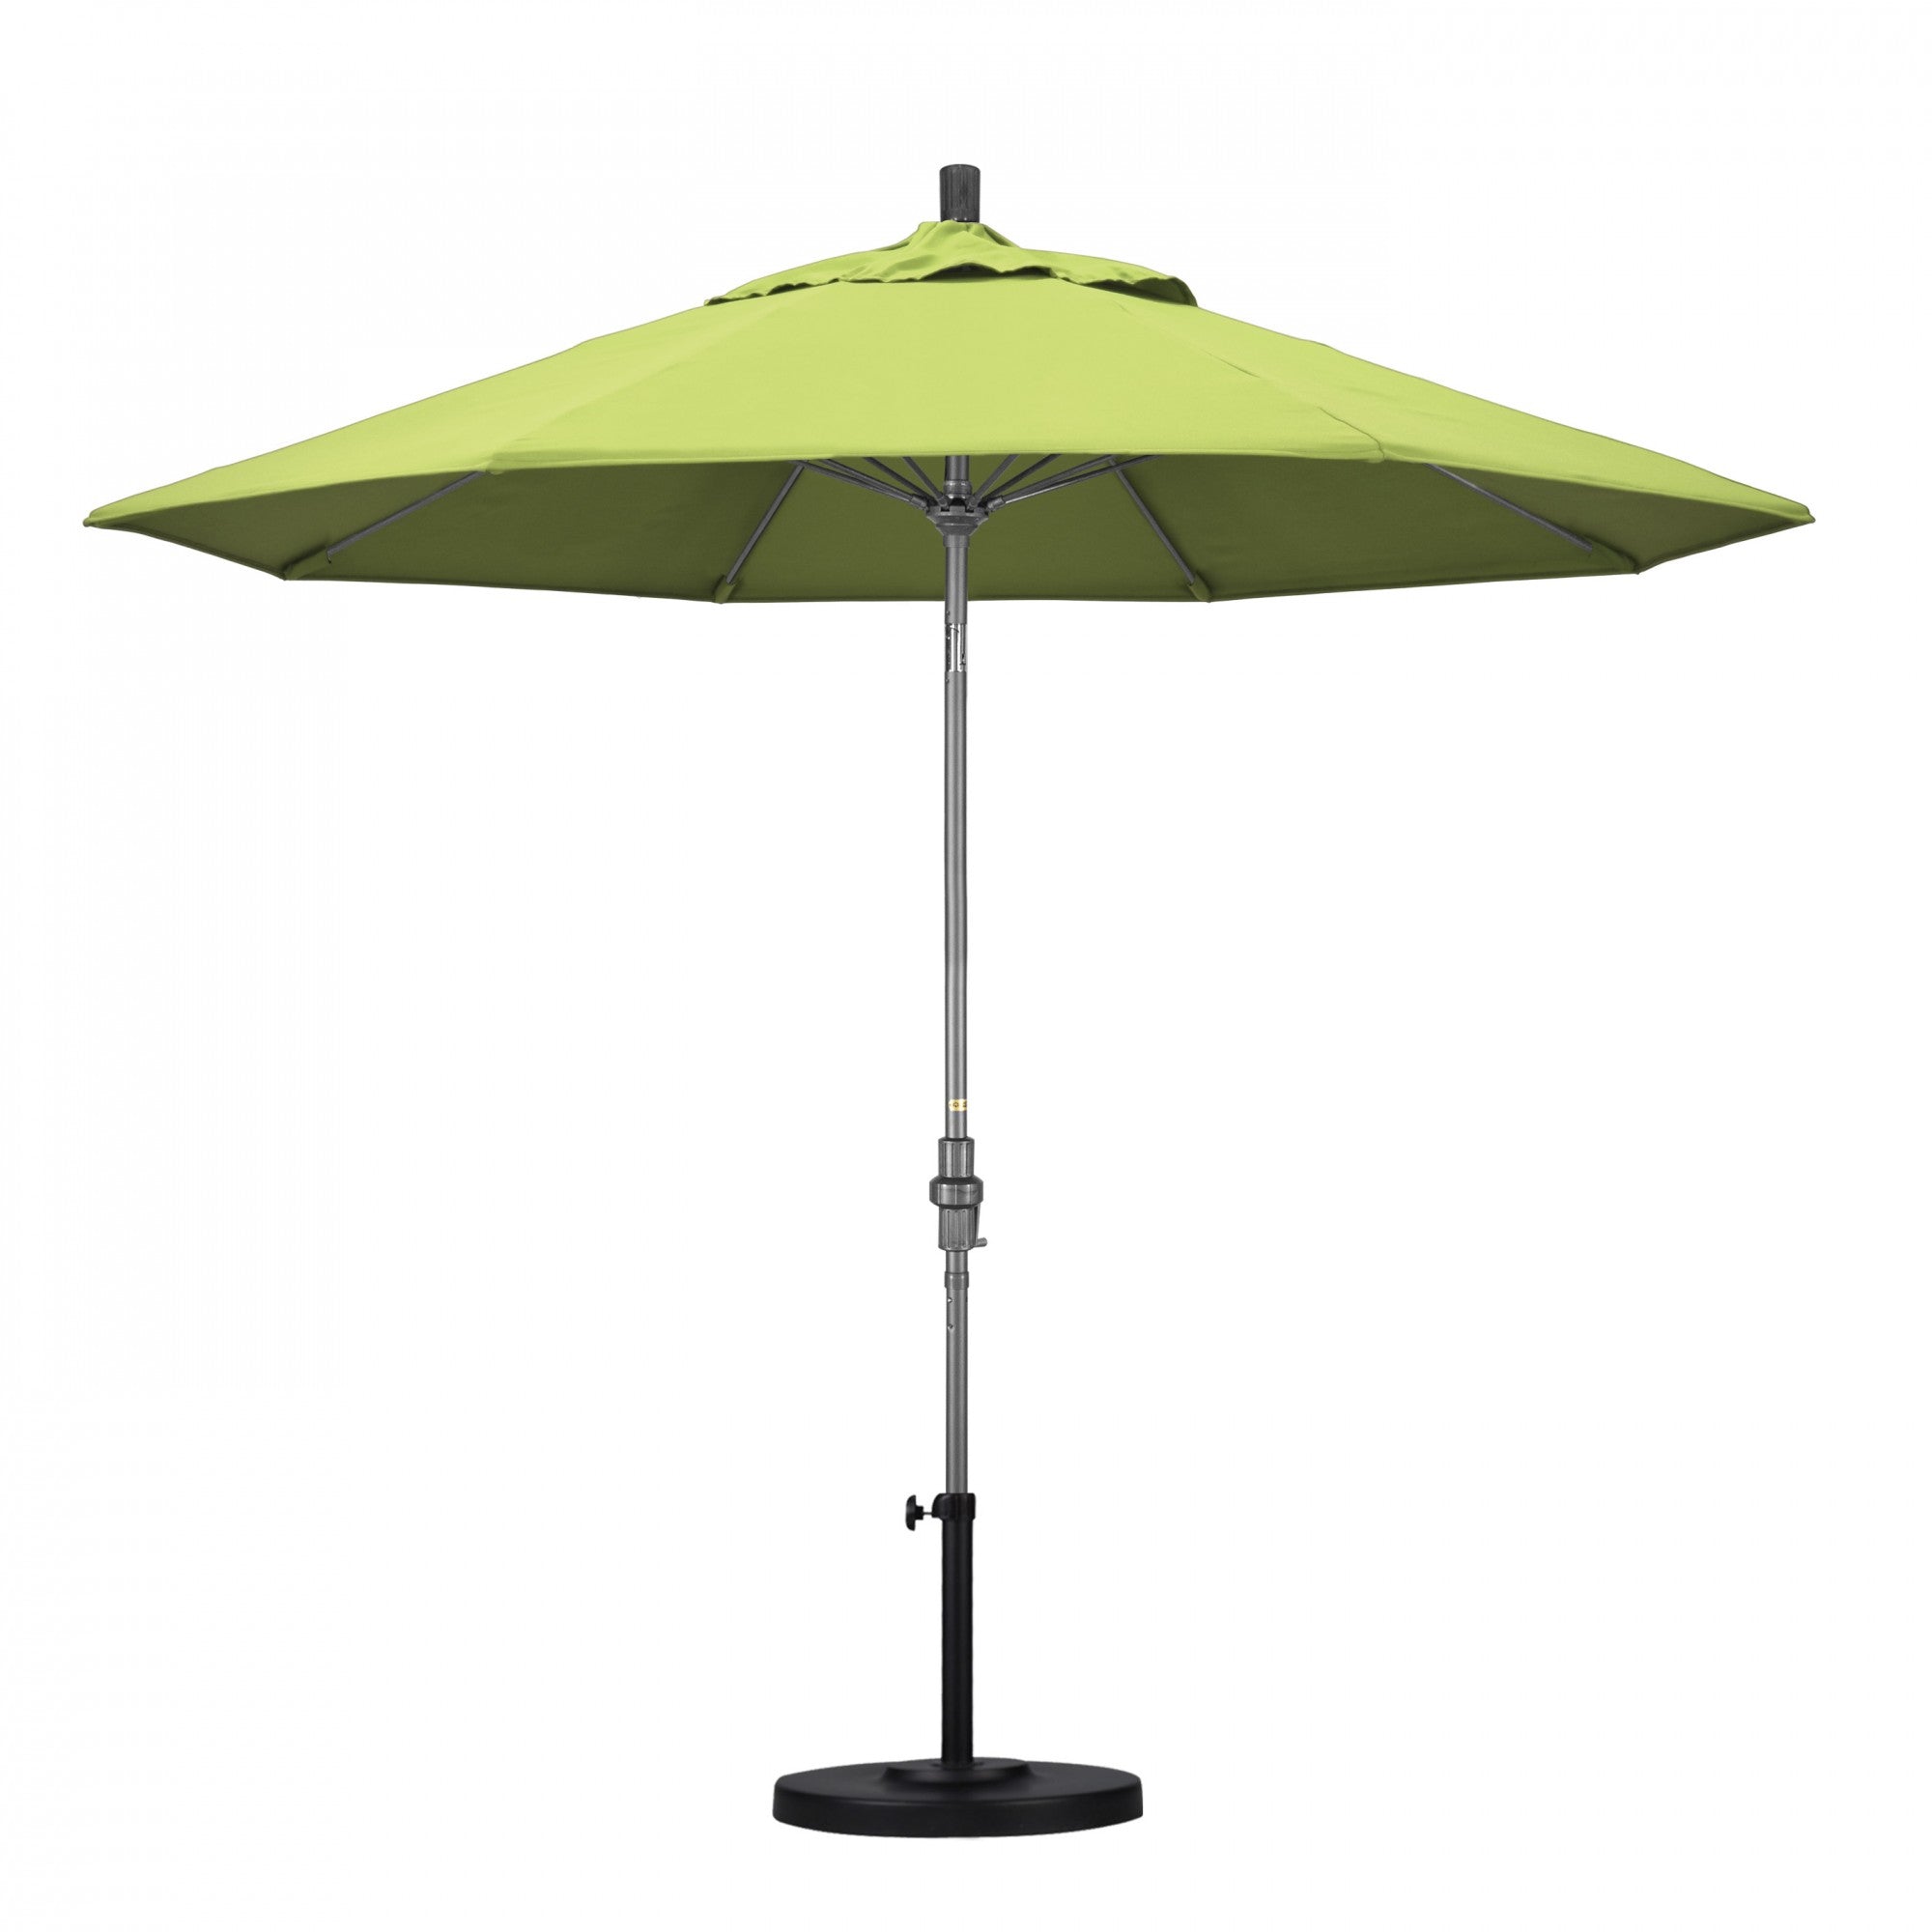 California Umbrella - 9' - Patio Umbrella Umbrella - Aluminum Pole - Parrot - Sunbrella  - GSCUF908010-5405